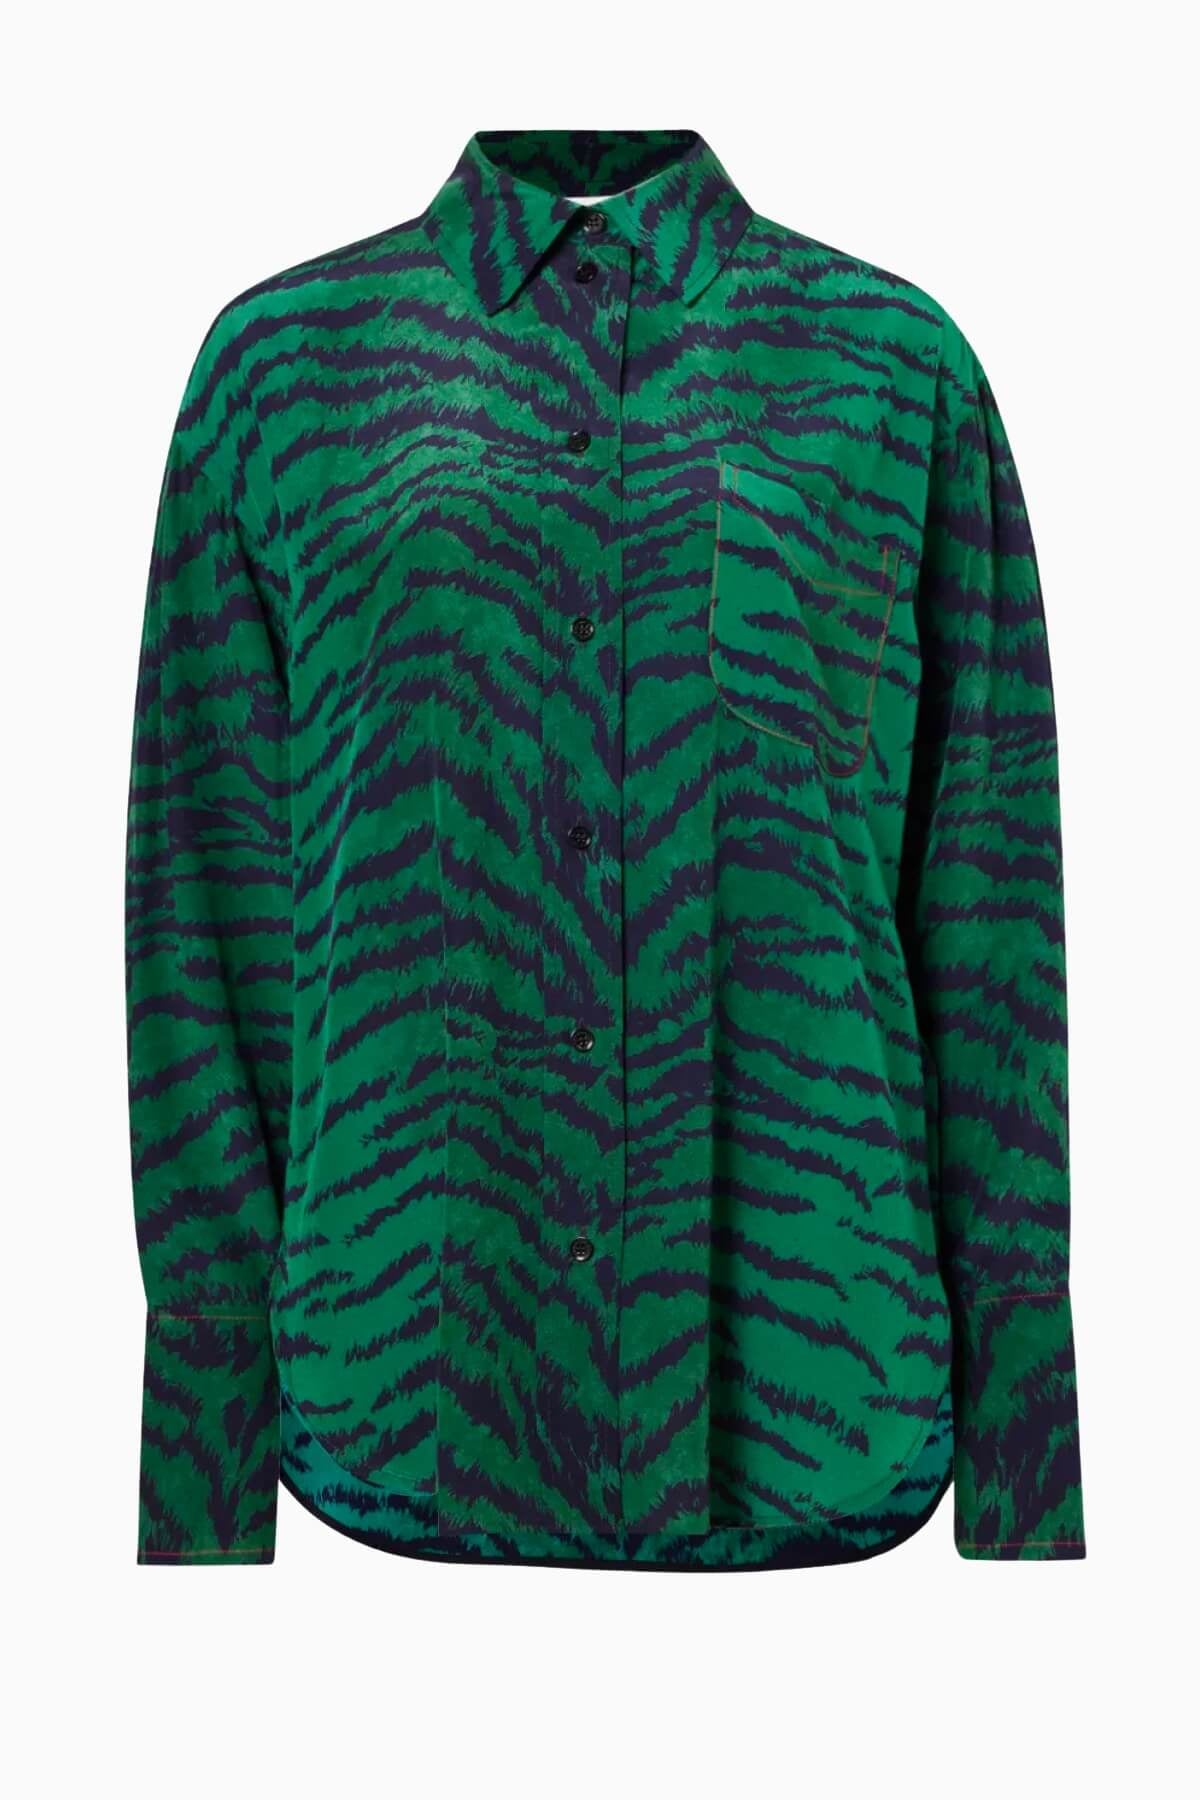 Victoria Beckham Tiger Print Pyjama Shirt - Green/ Navy Tiger